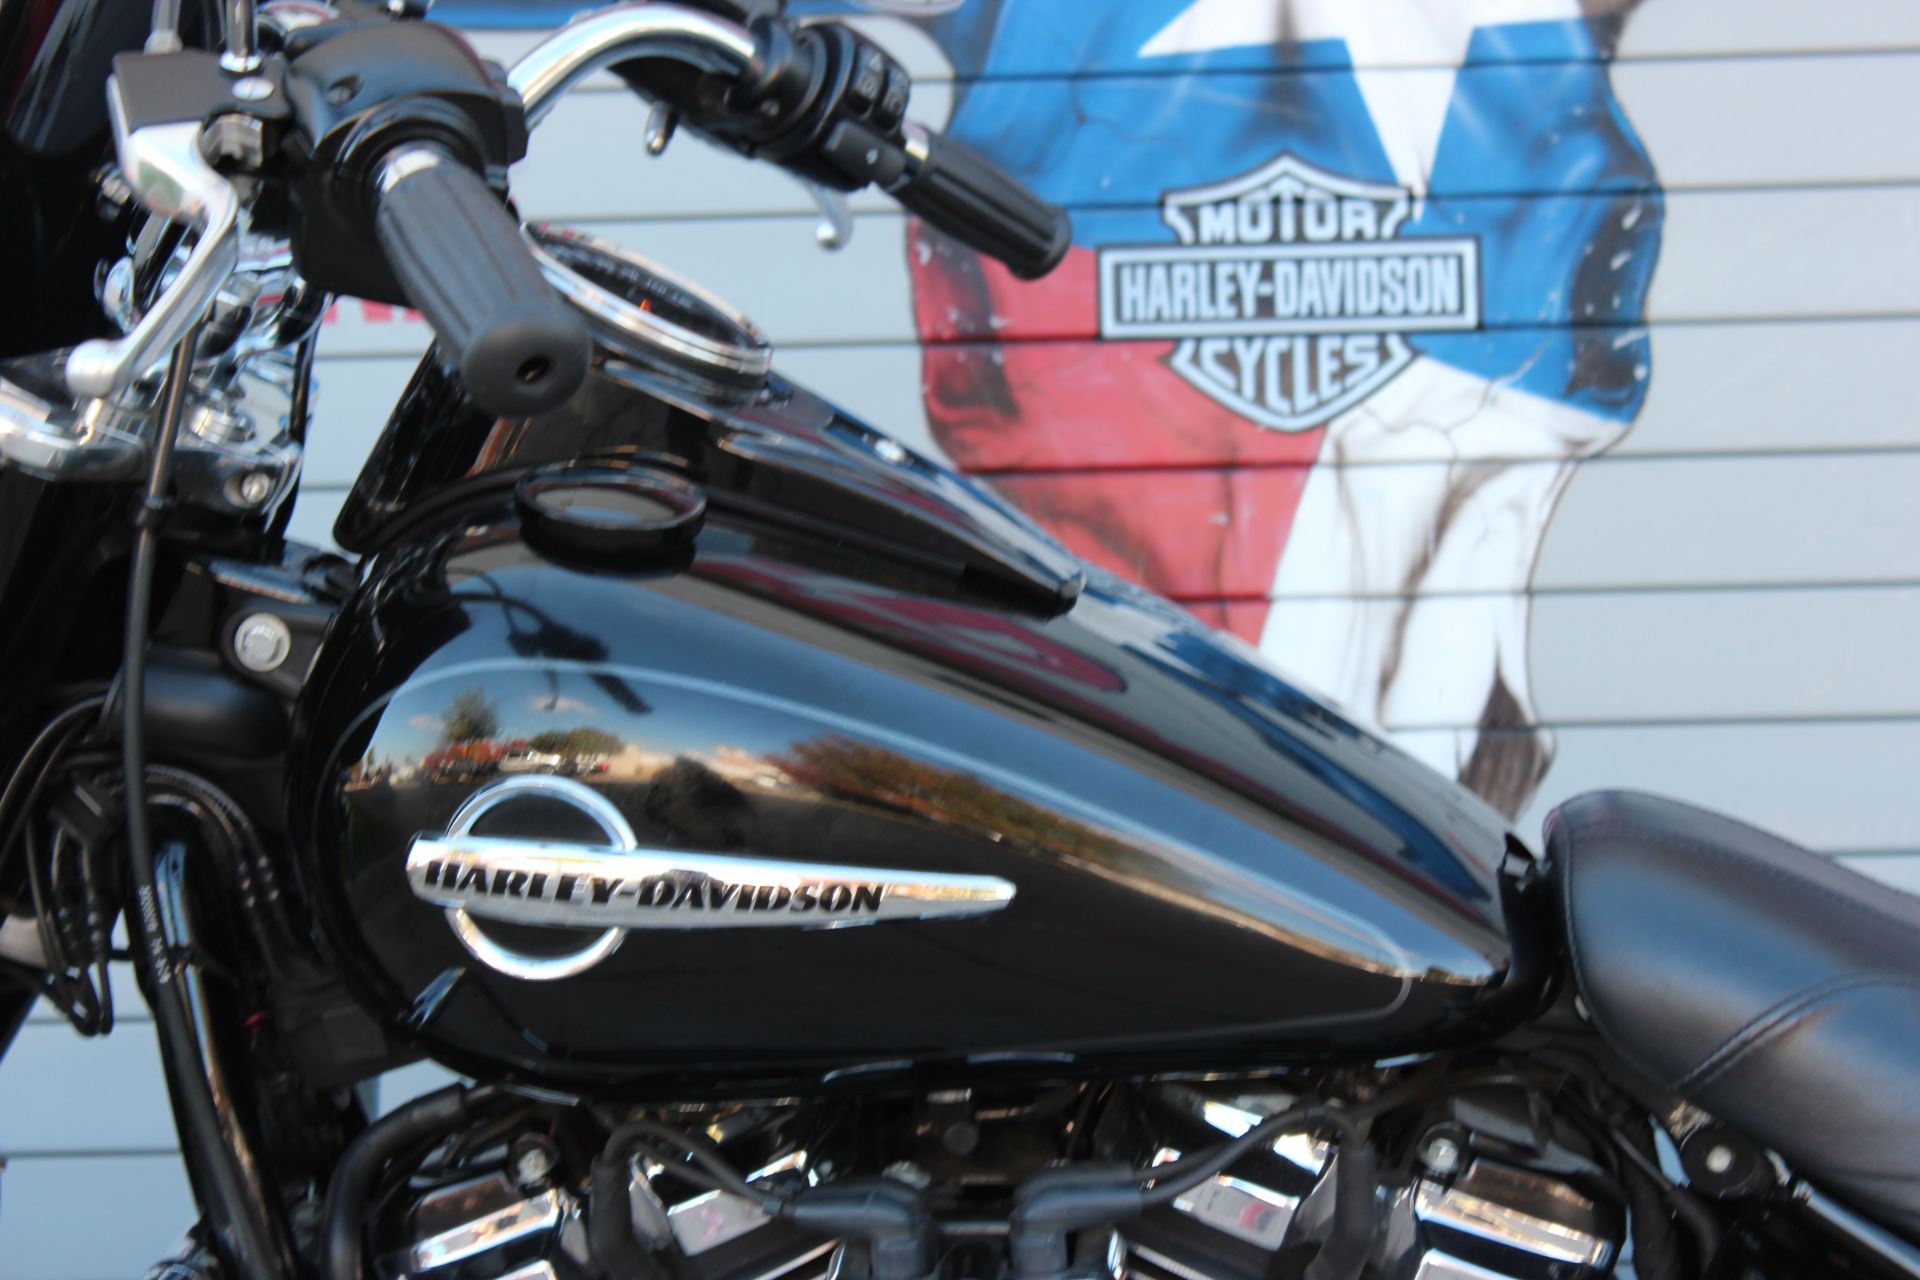 2018 Harley-Davidson Heritage Classic in Grand Prairie, Texas - Photo 16